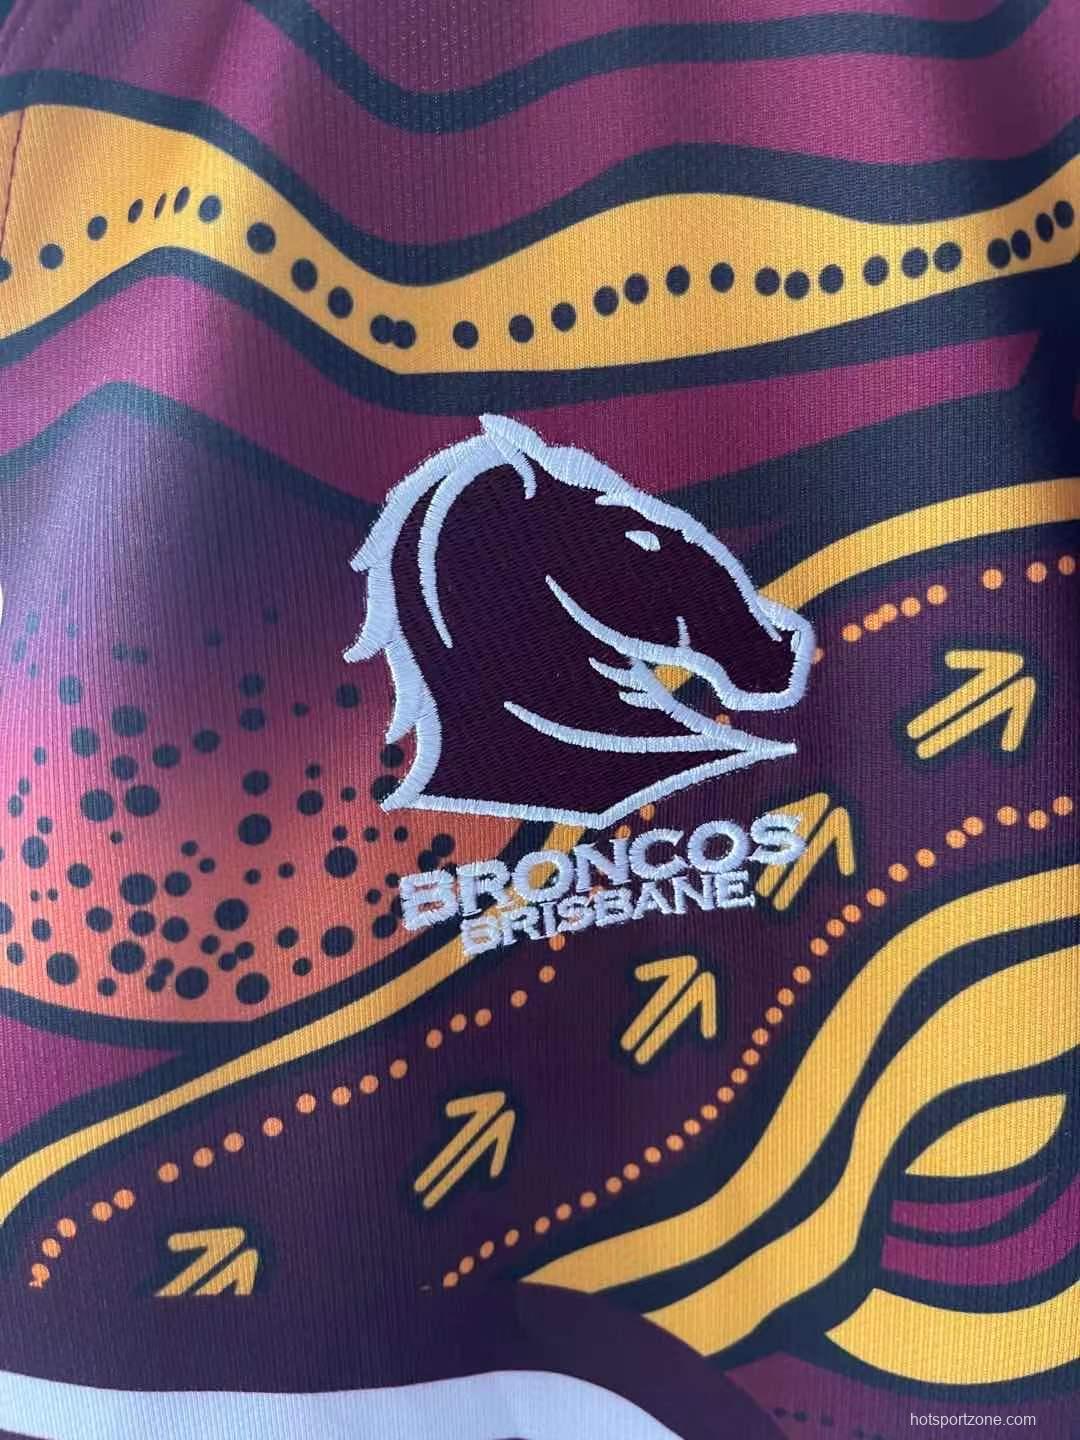 Brisbane Broncos 2021 Men's Indigenous Rugby Jersey